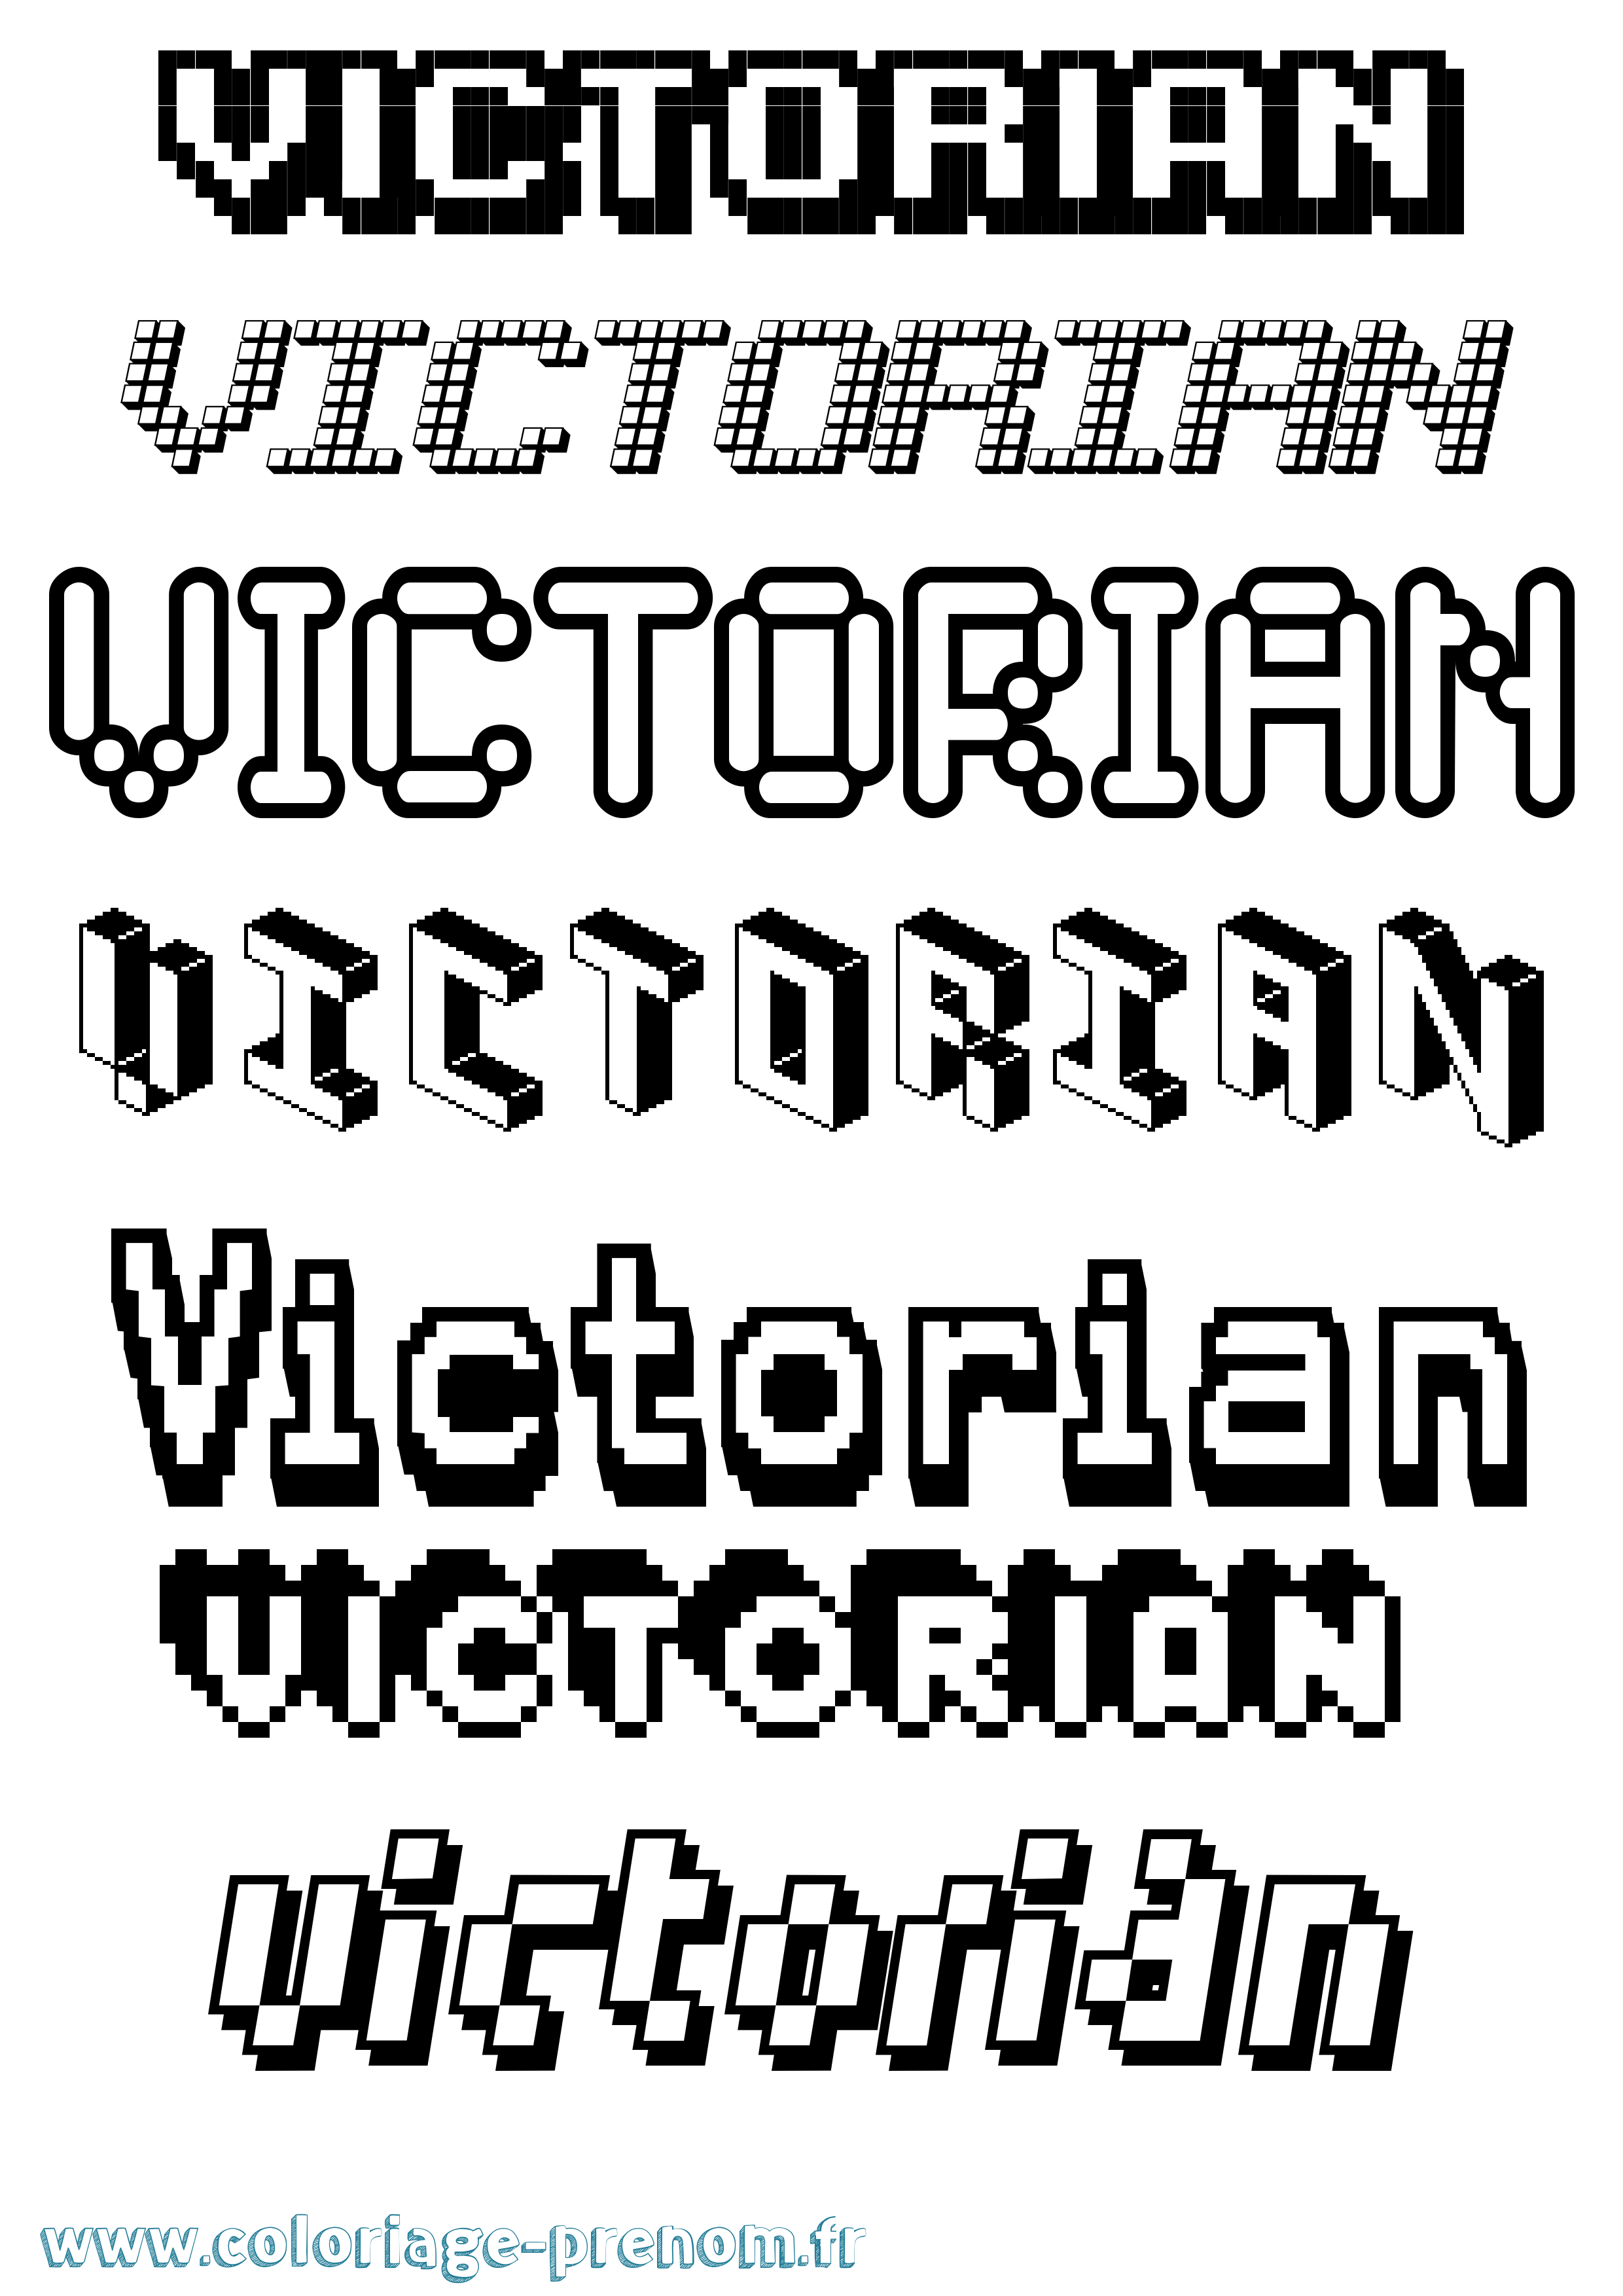 Coloriage prénom Victorian Pixel